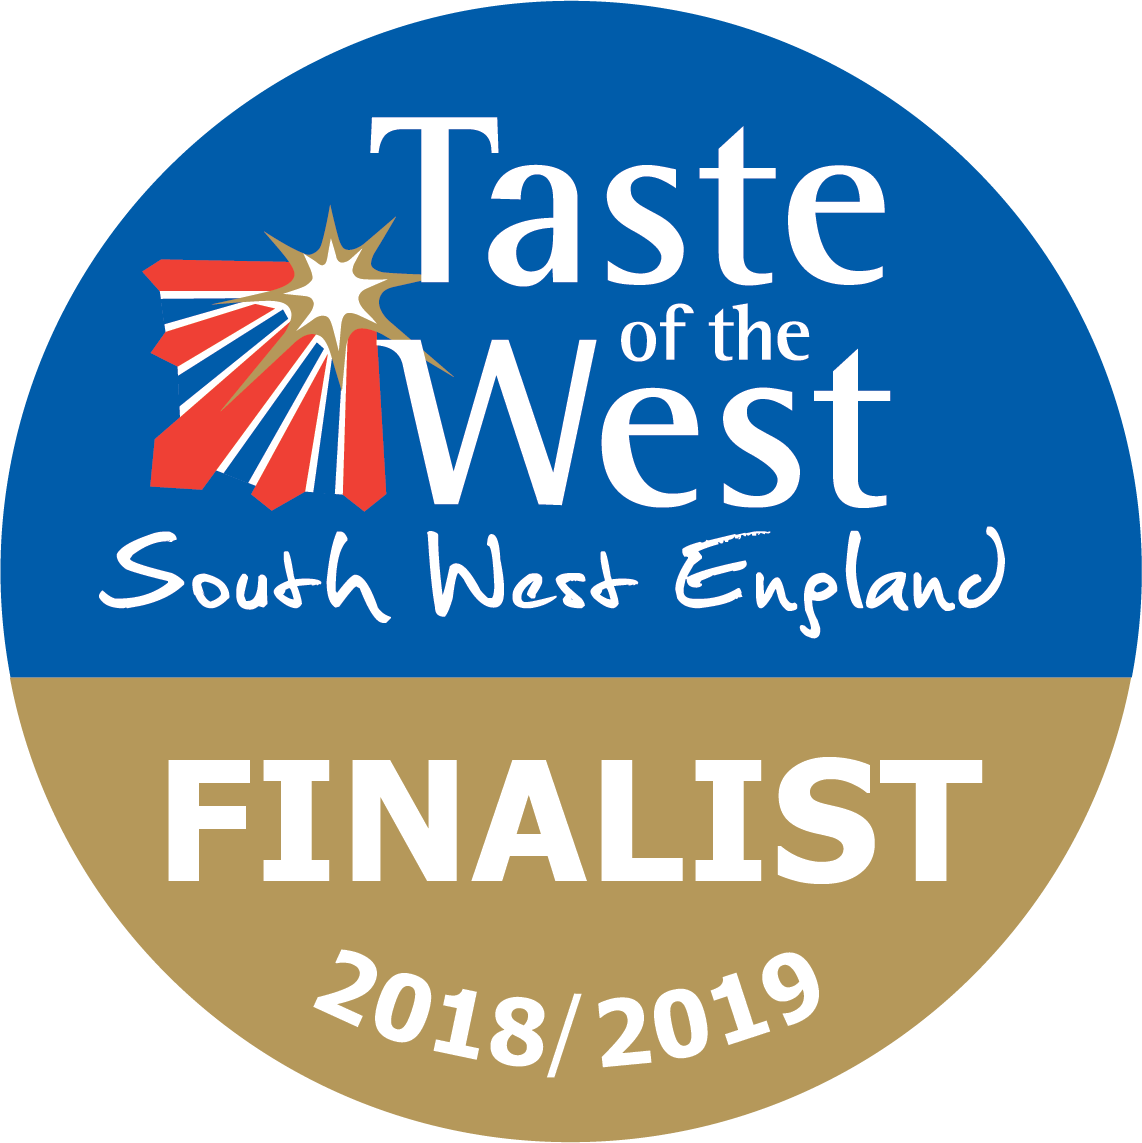 Taste of the west finalist